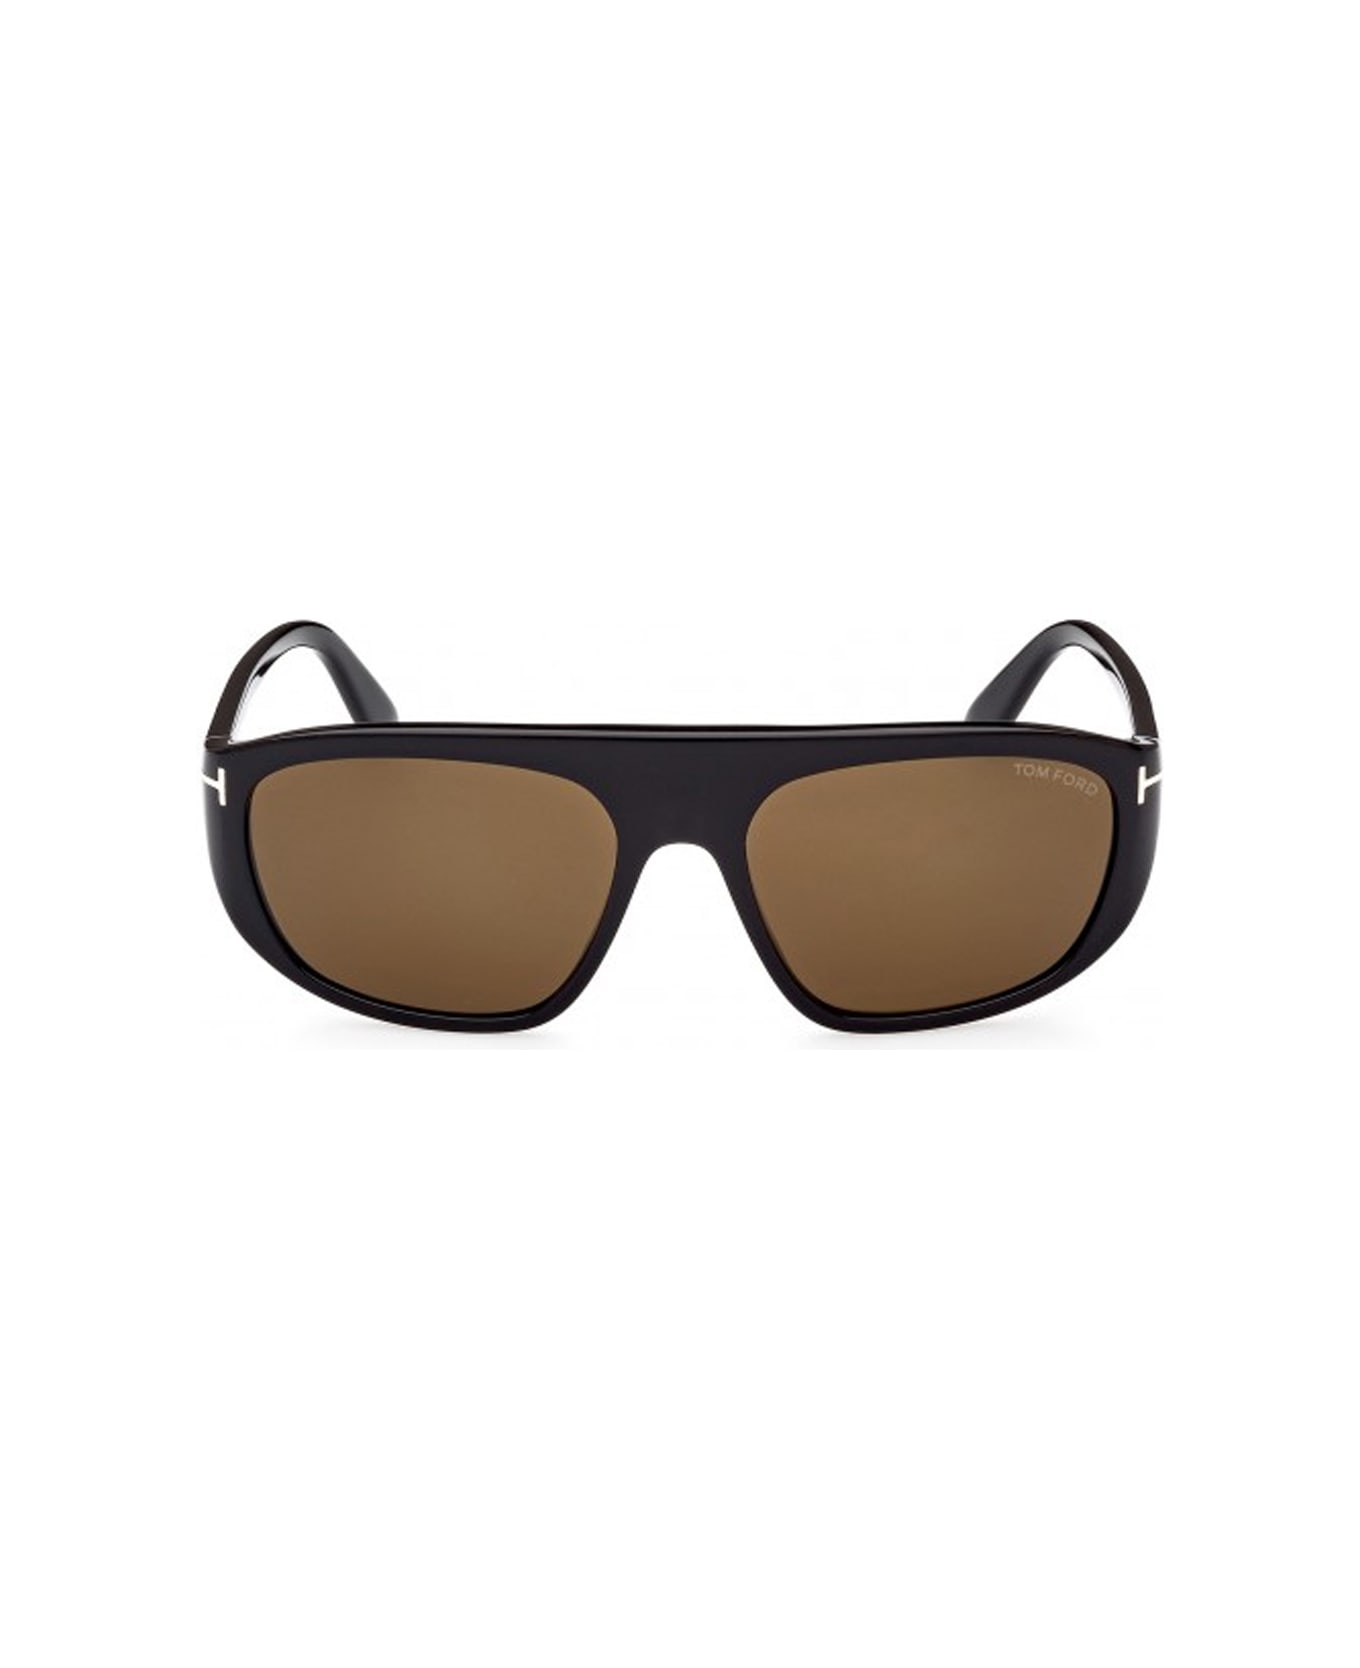 Tom Ford Eyewear Ft1002 Sunglasses - Nero